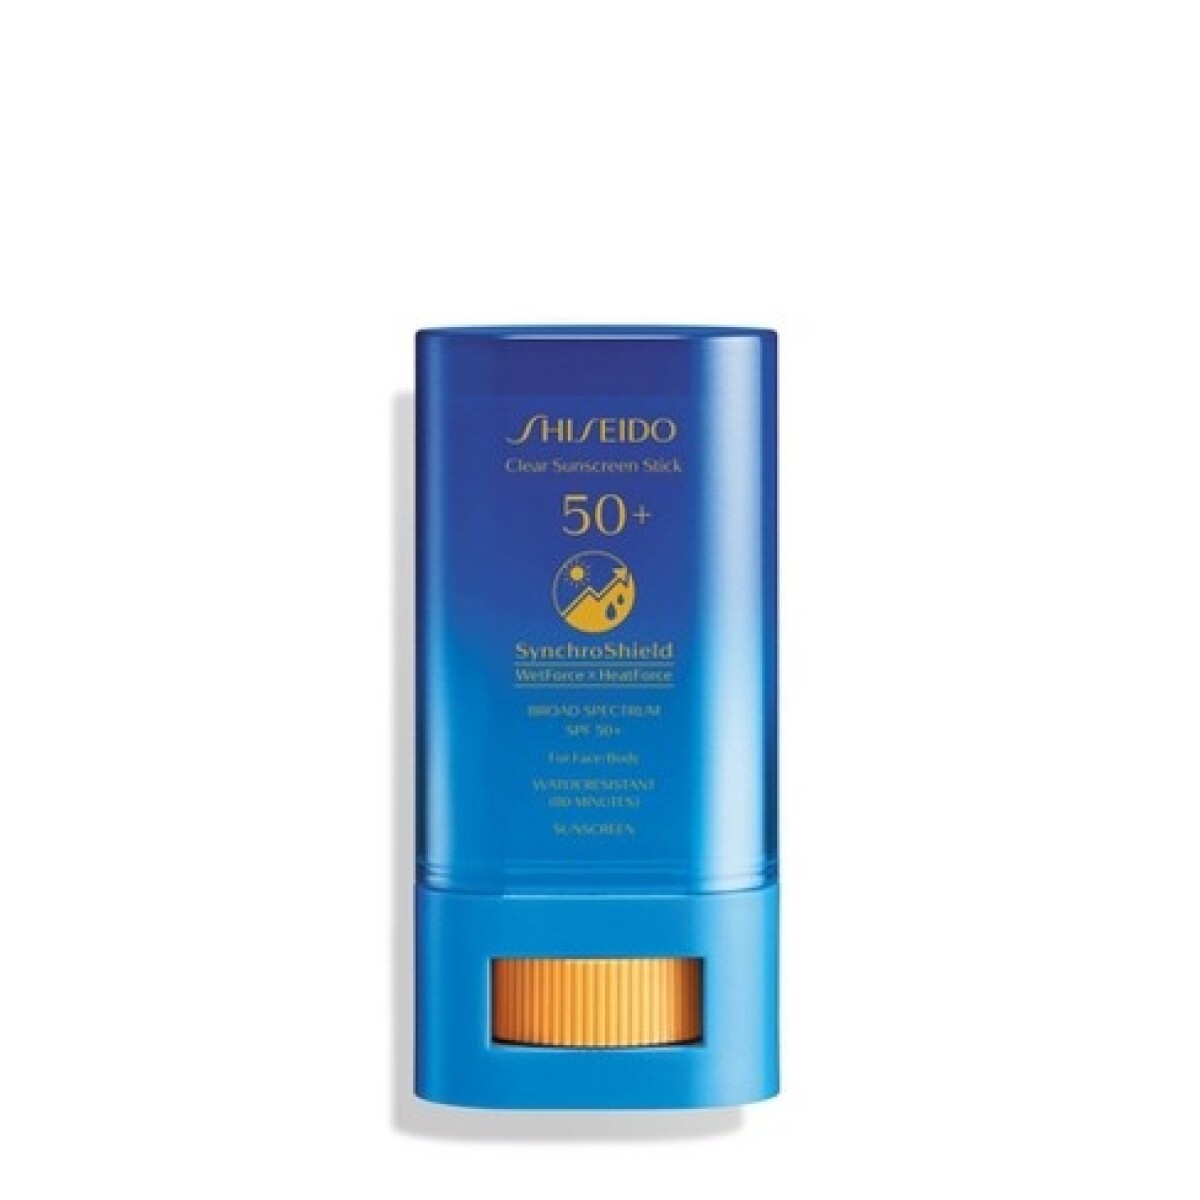 Shiseido Gsc Clear Suncare Stick Spf50+ 